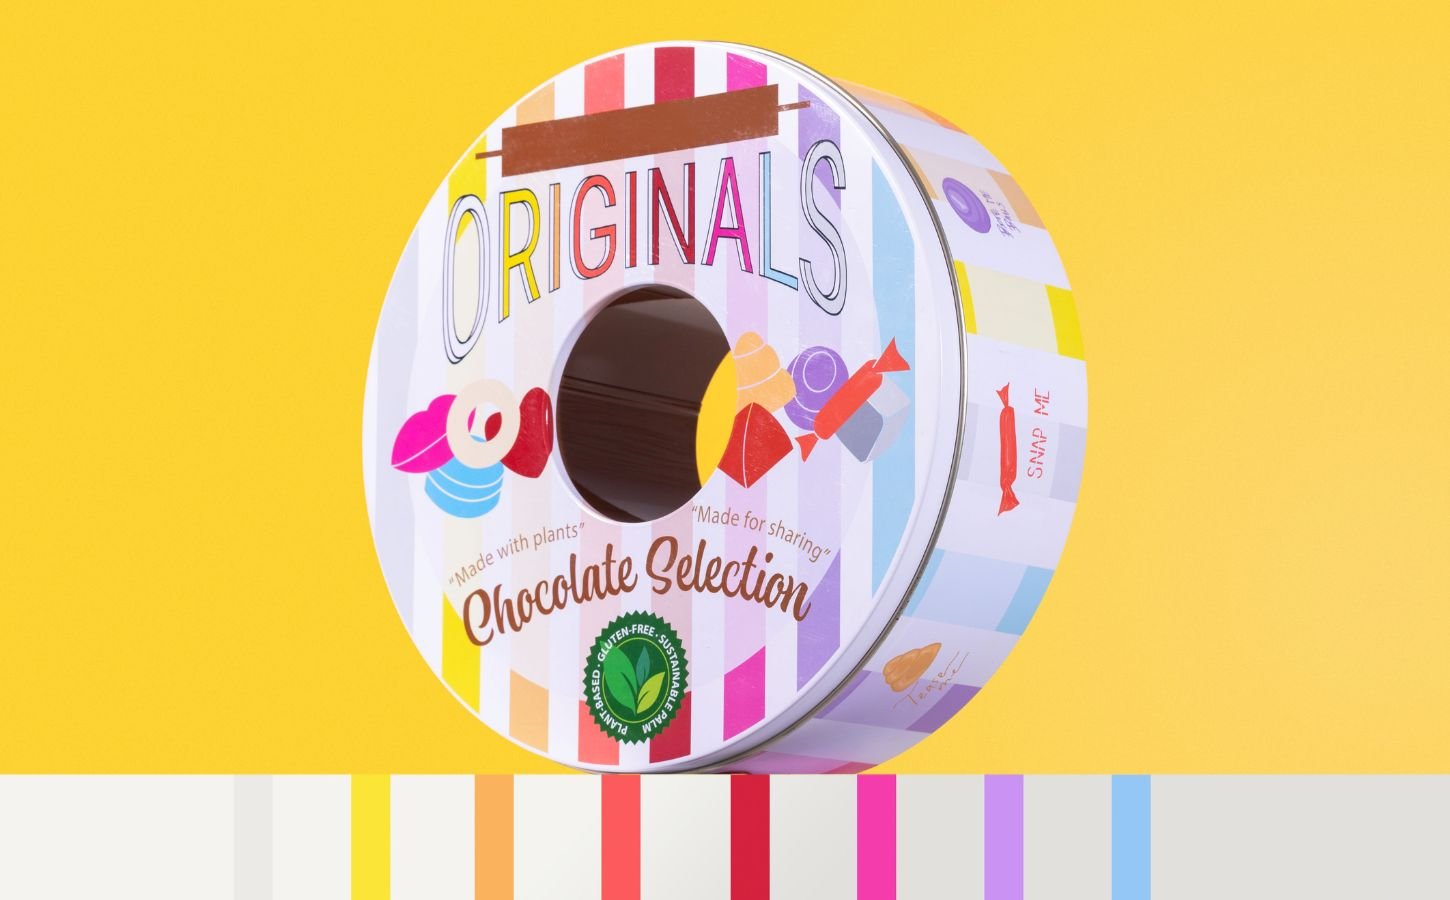 A dairy-free vegan chocolate selection tin named "Catherine Originals"